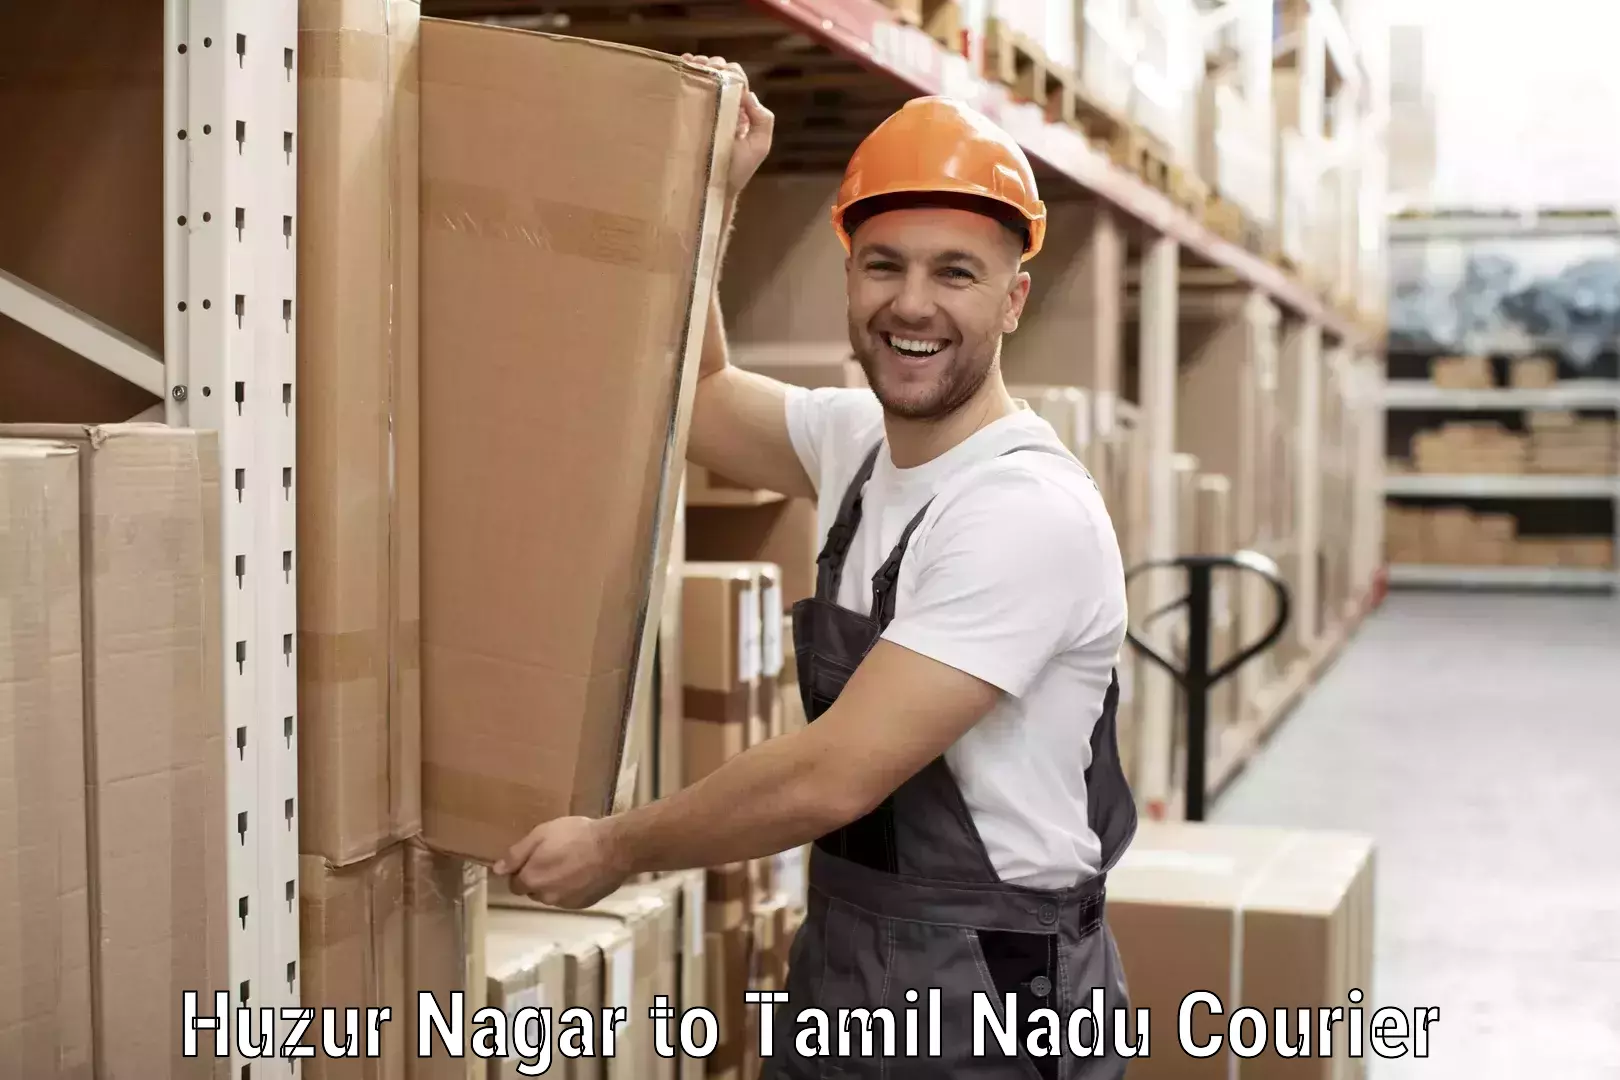 Bulk shipping discounts Huzur Nagar to Tamil Nadu